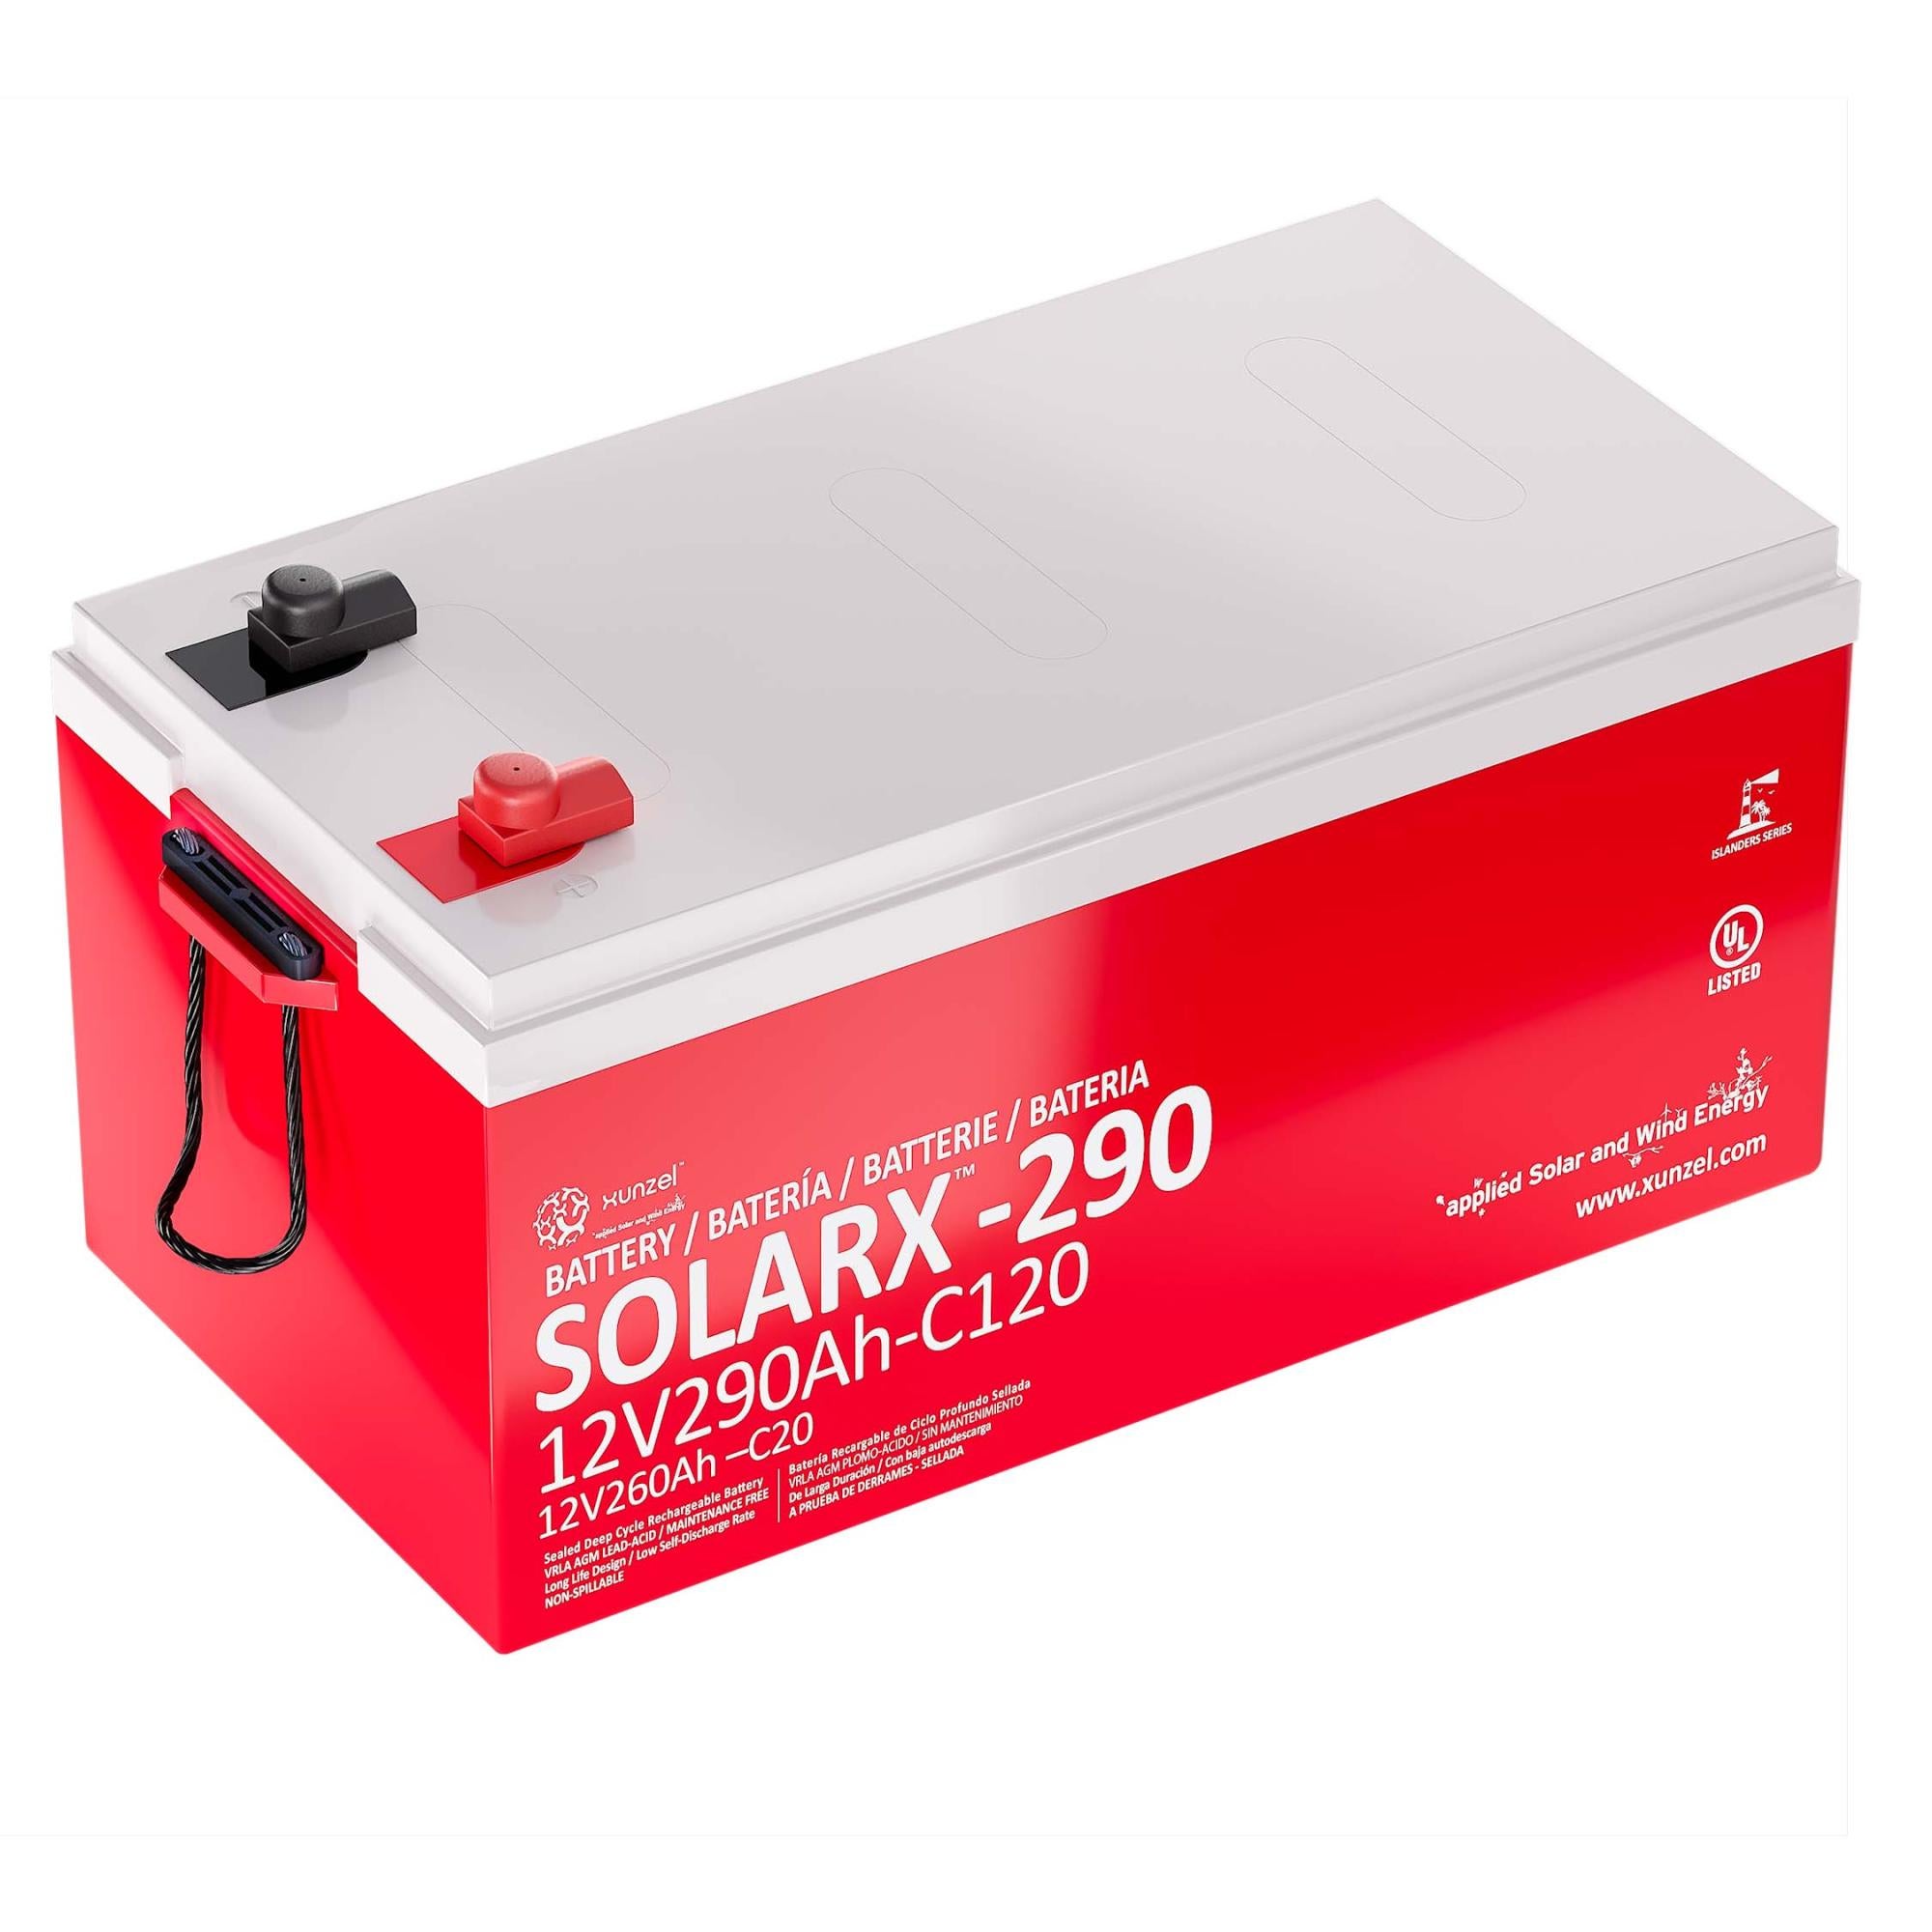 Batería solar agm solarx-290 xunzel 12v 290ah sin mantenimiento